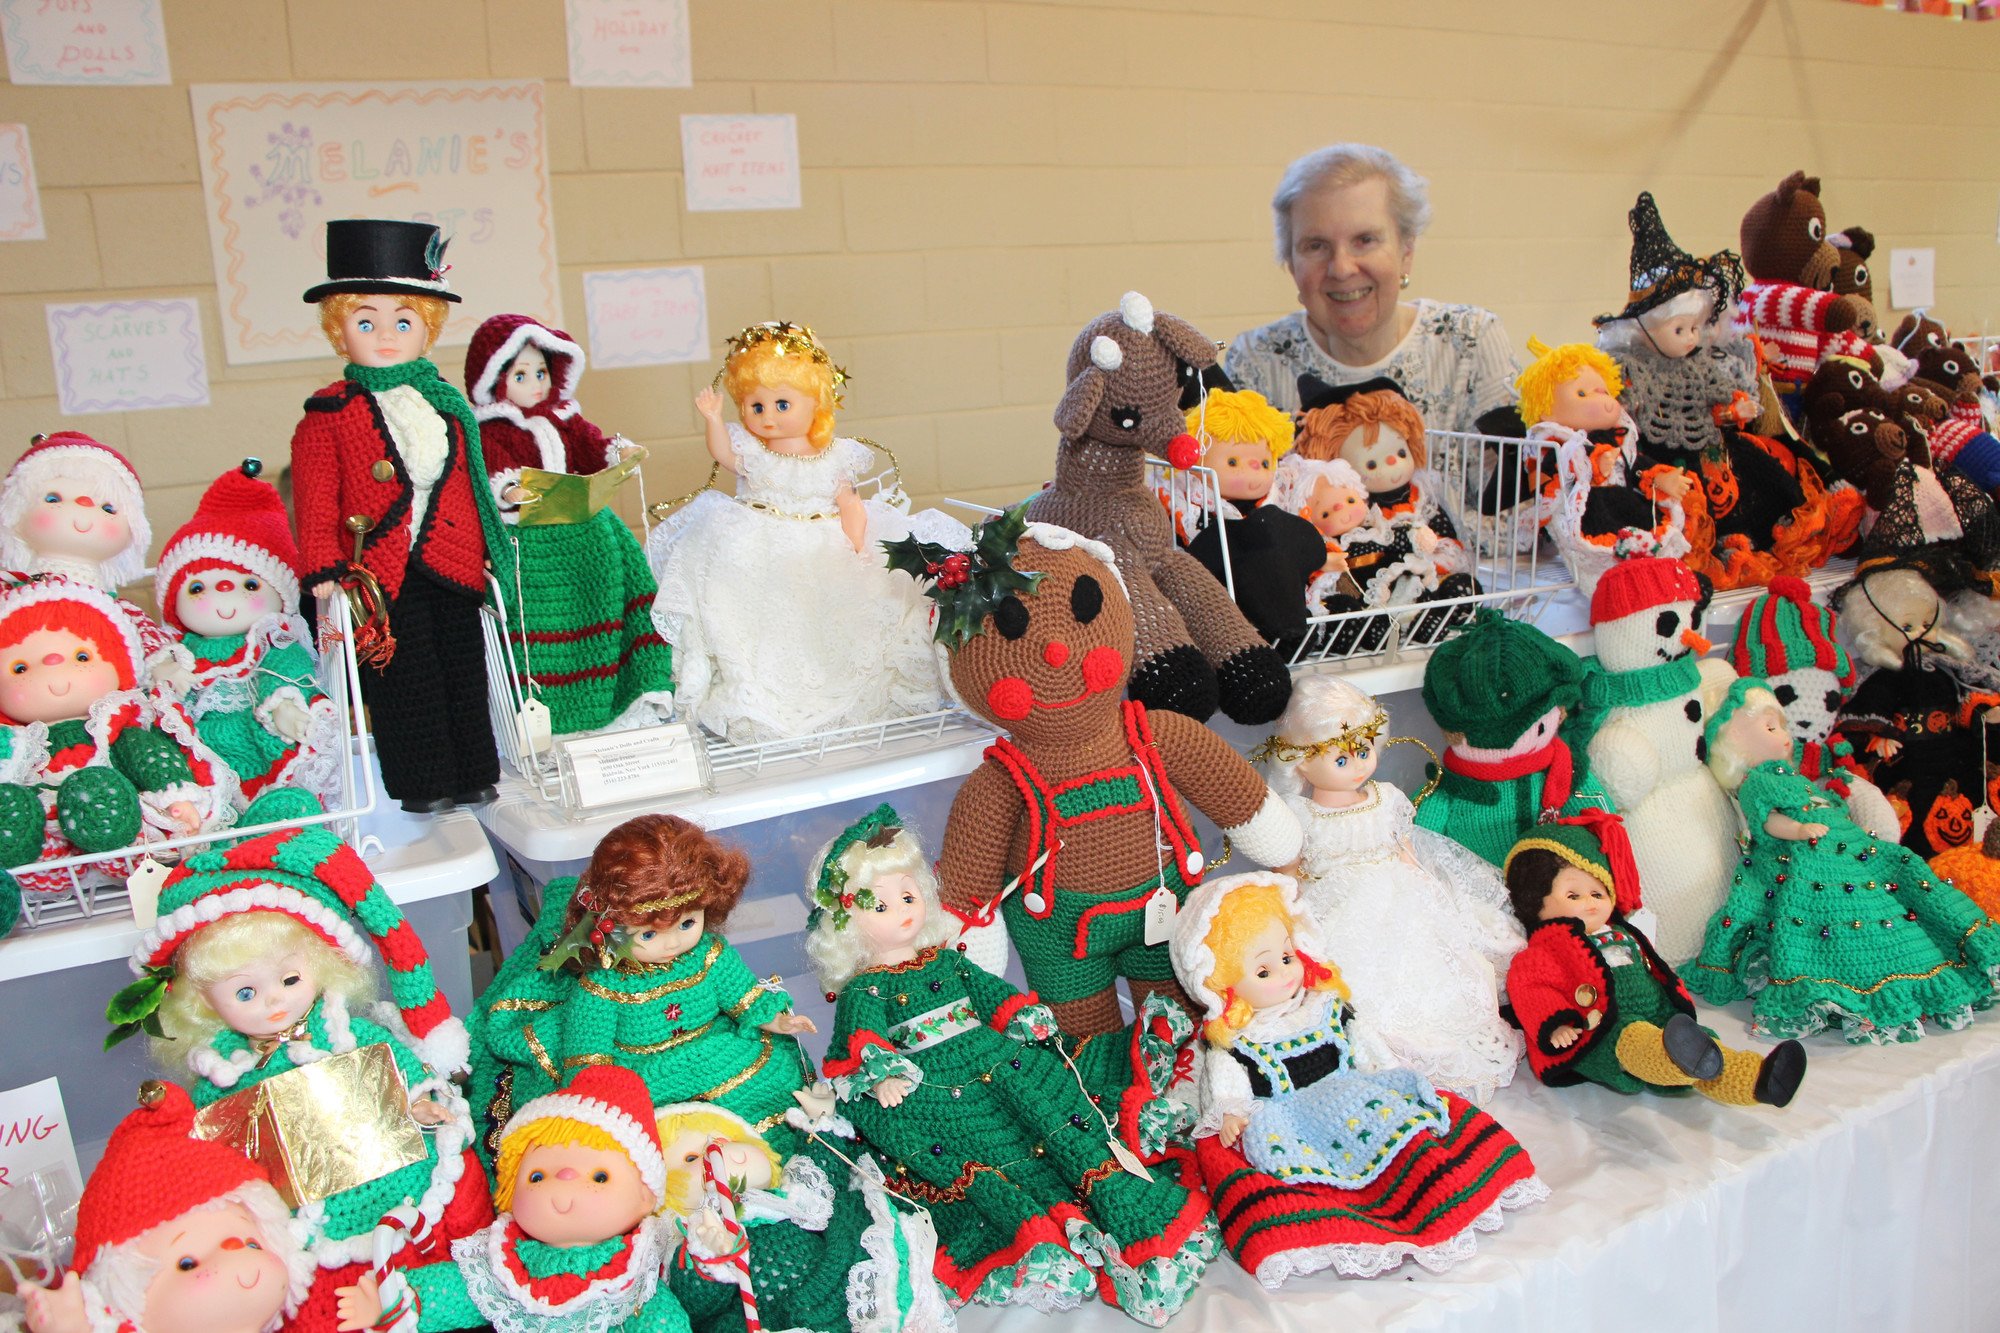 Melanie Freese had a number festive dolls on display.